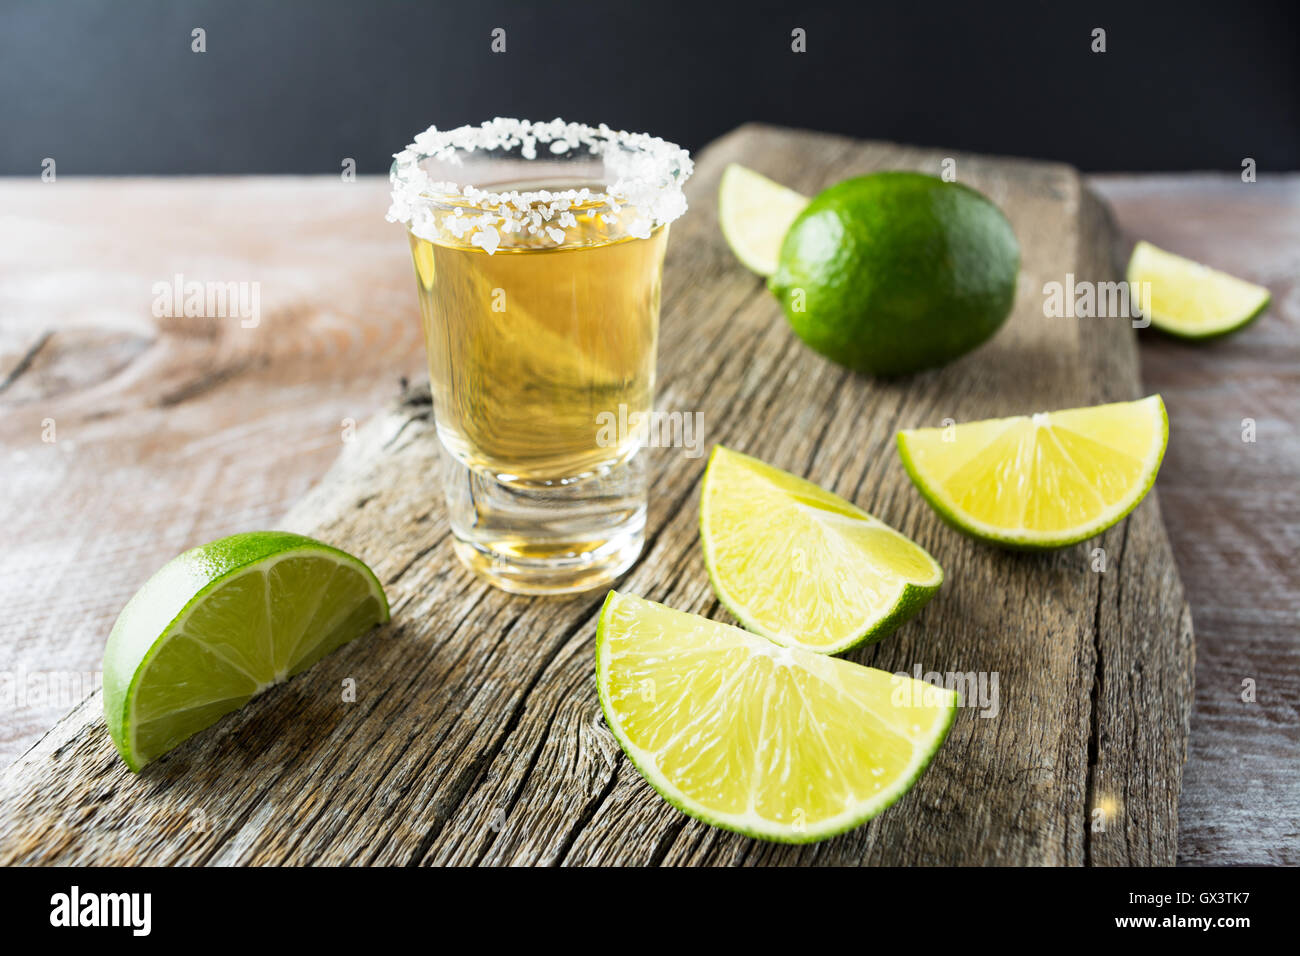 Tequila shot con cal sobre fondo de madera de estilo rústico. Beber alcohol fuerte. Oro tequila mexicano shot. Foto de stock